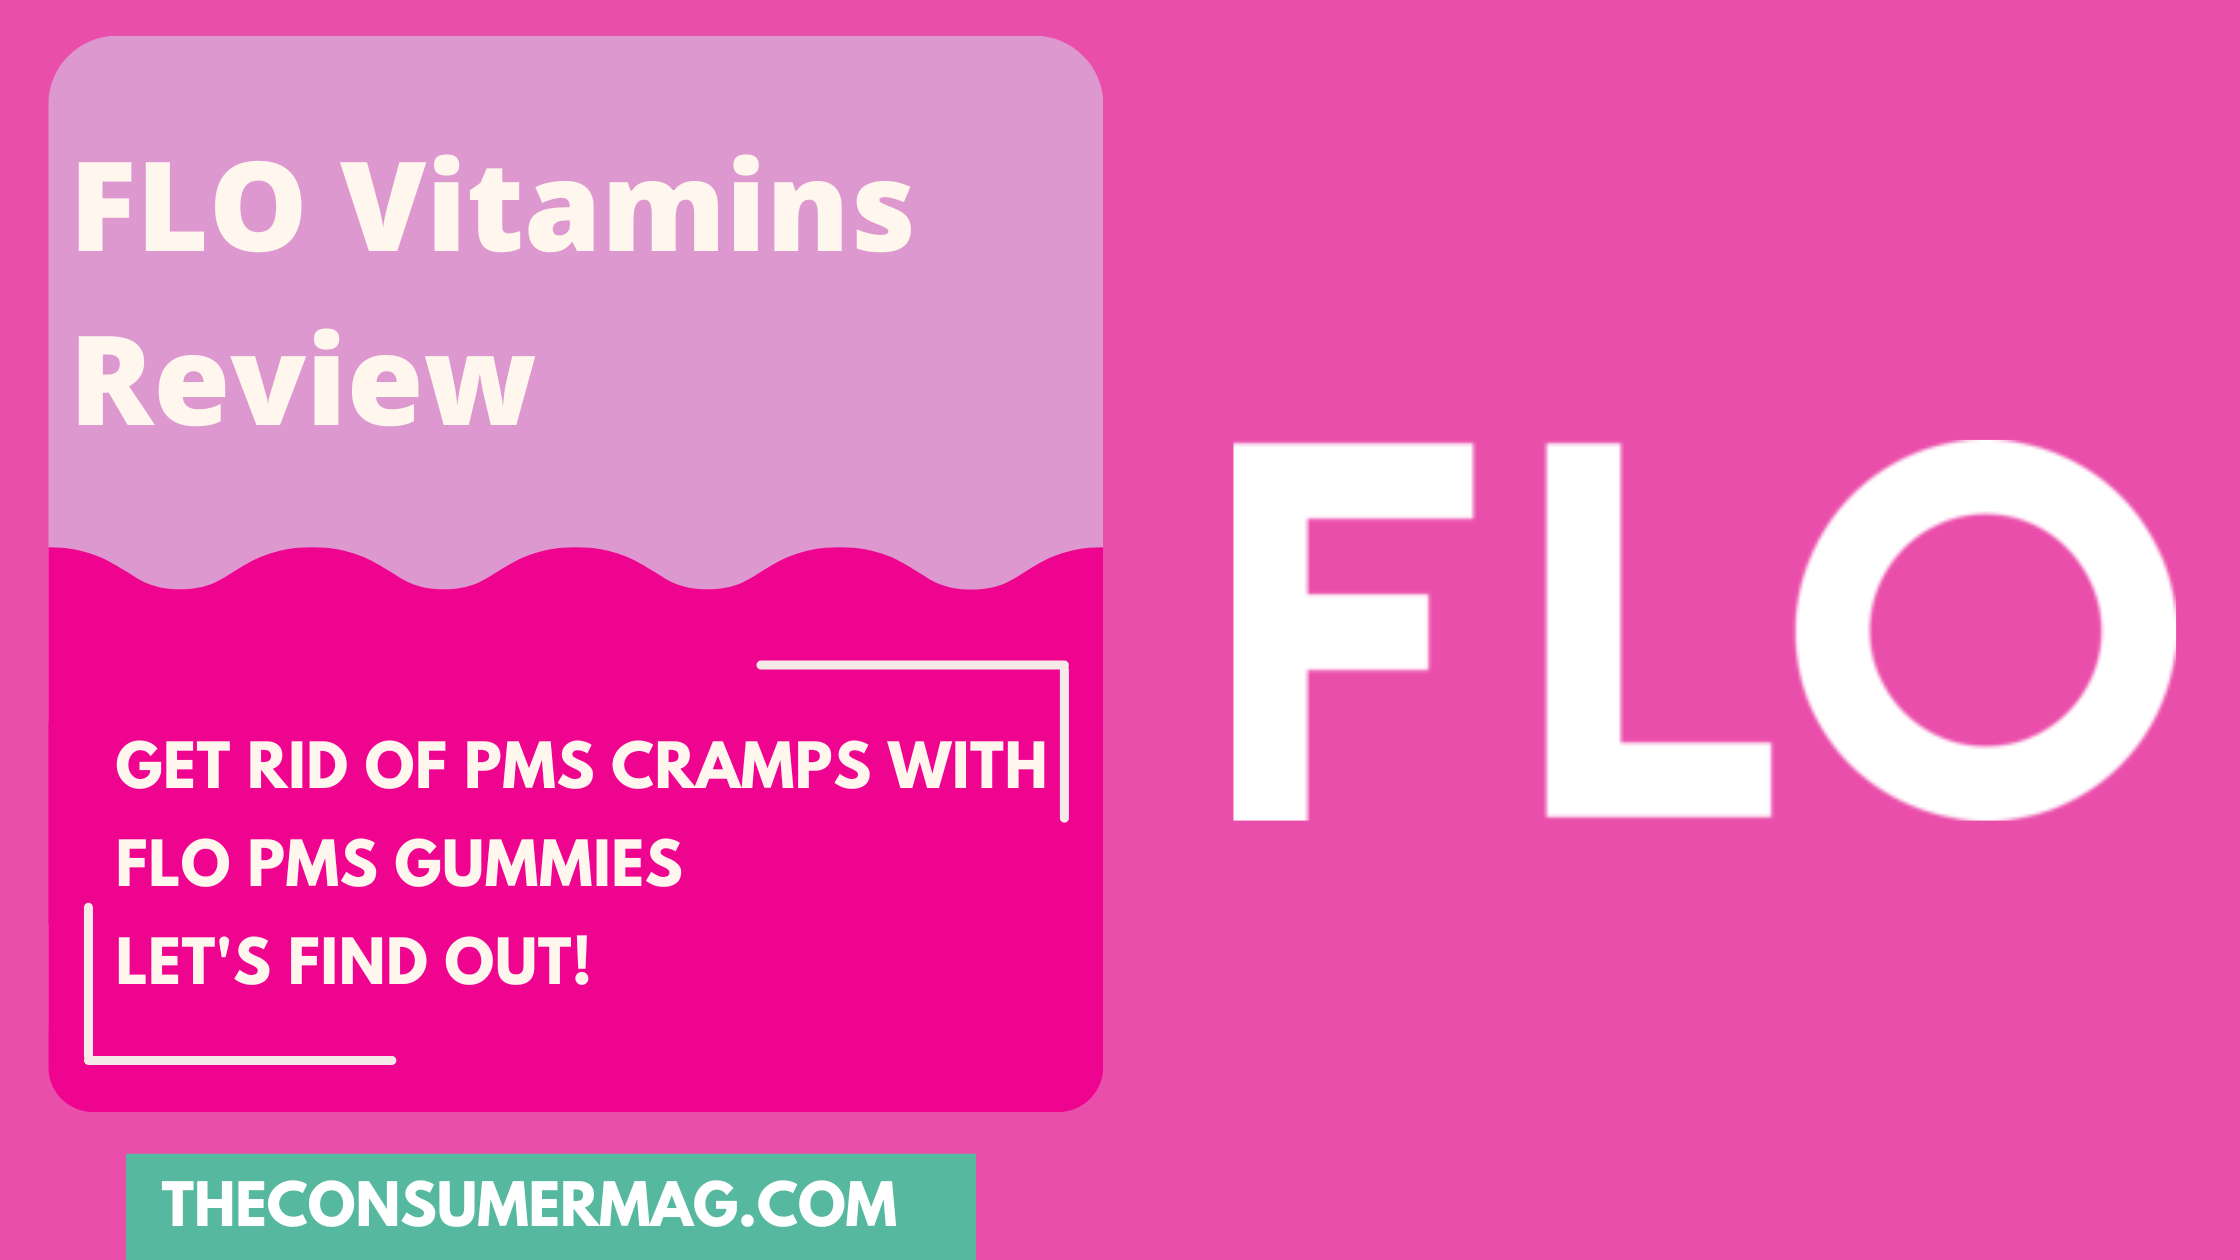 FLO Vitamins featured image